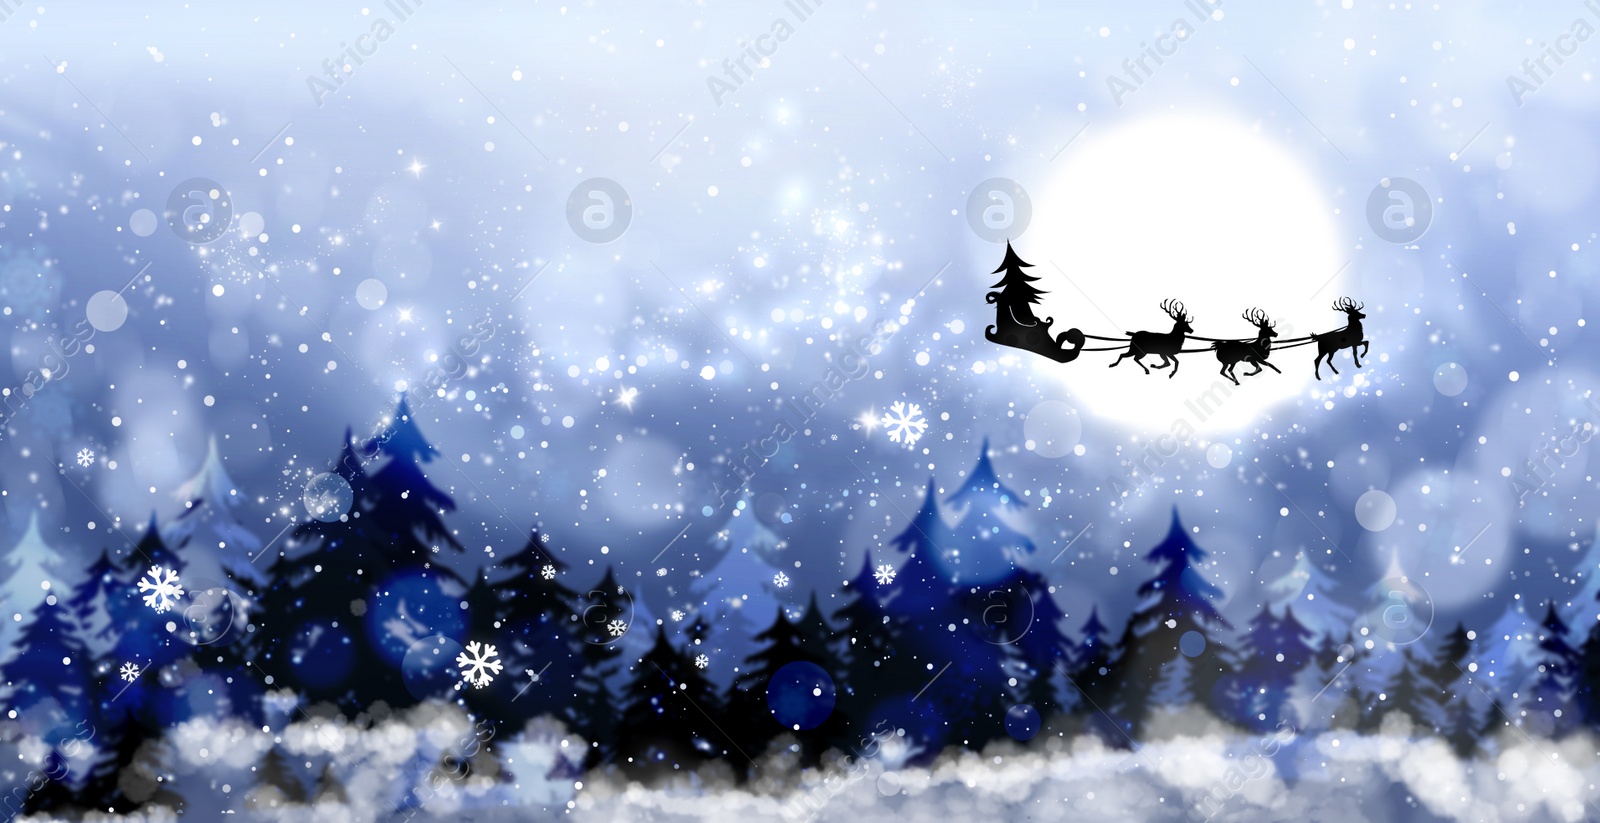 Image of Magic Christmas eve. Reindeers pulling Santa's sleigh in sky on full moon night, banner design